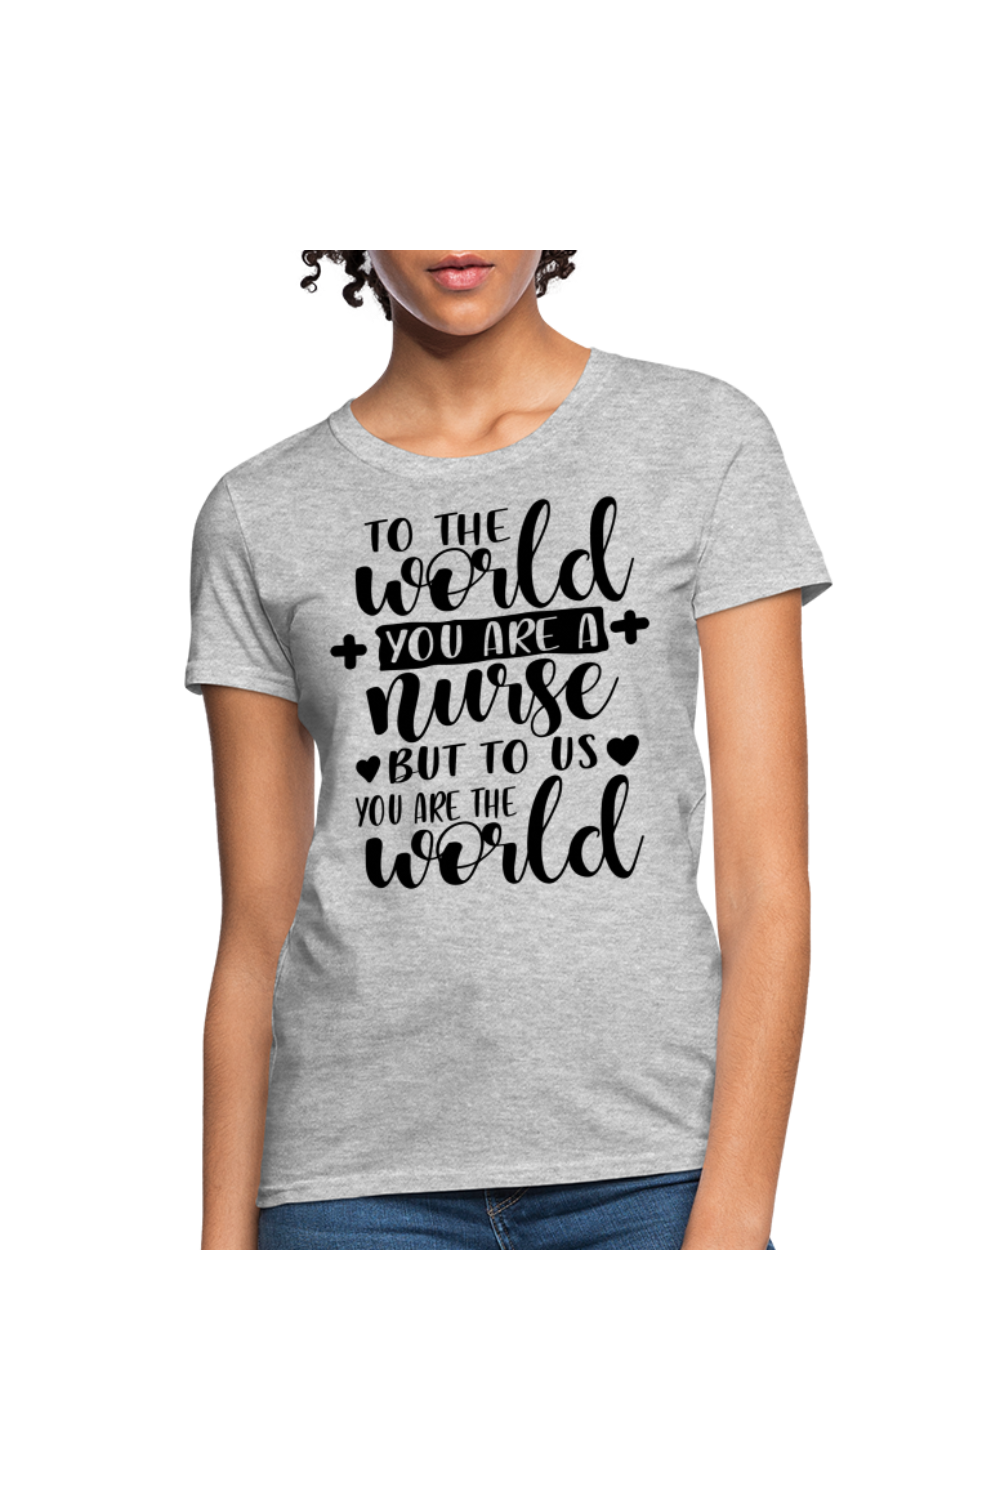 To The World Women's Nurse T-Shirt - heather gray